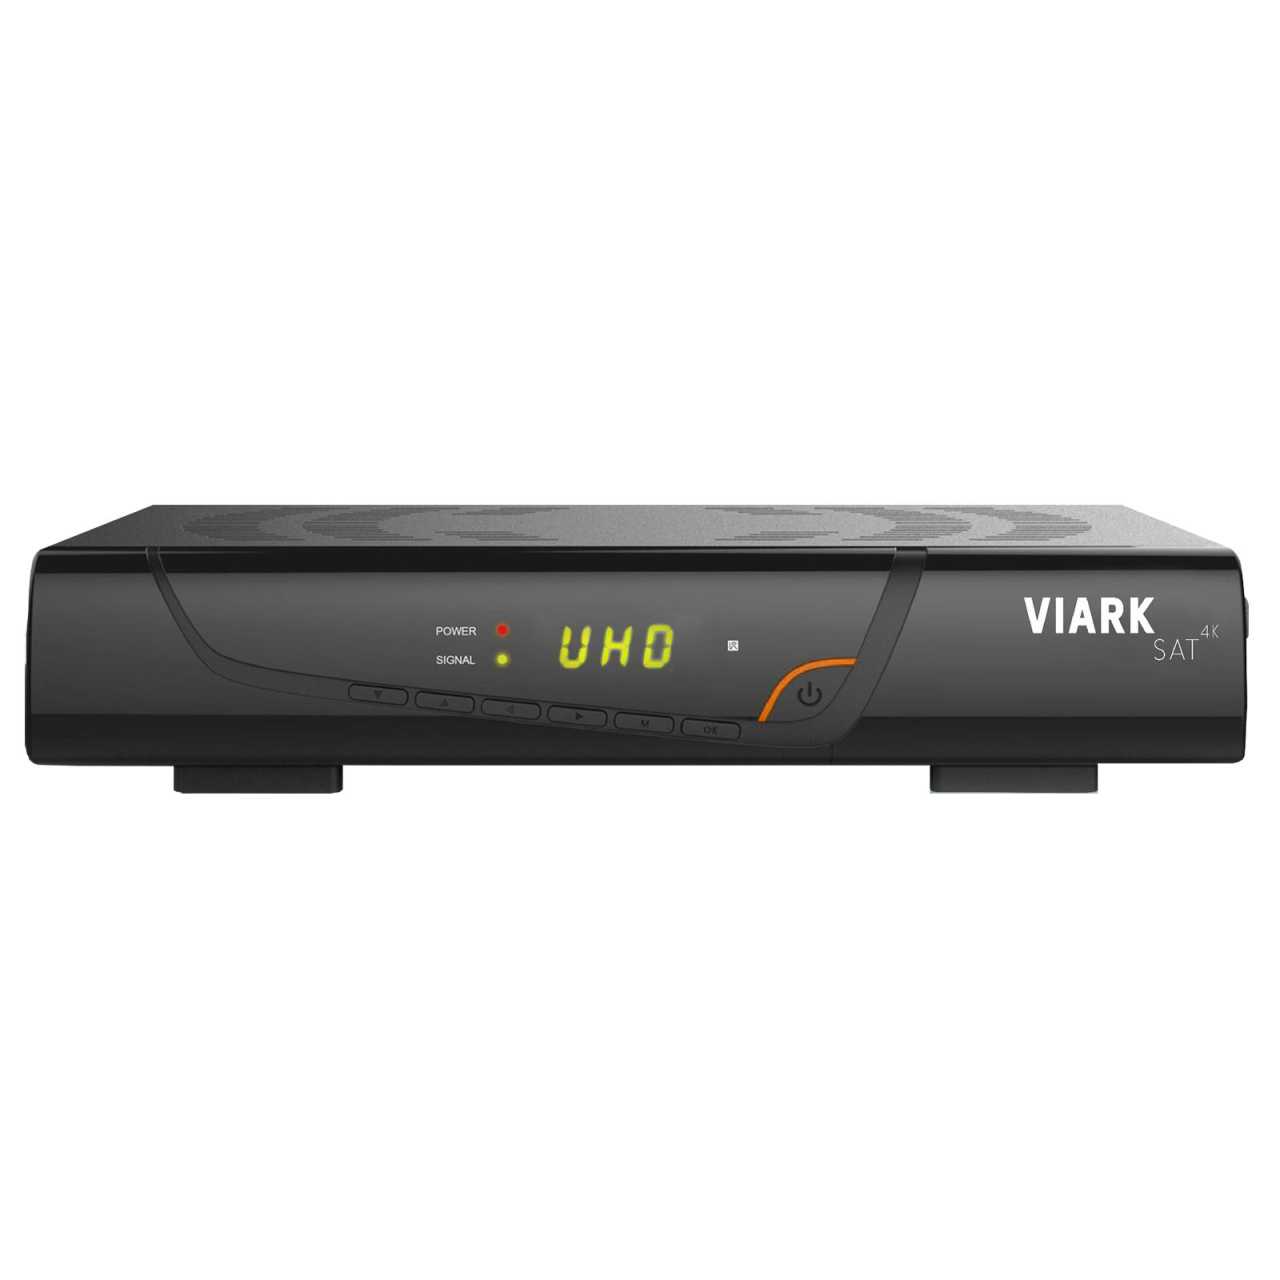 Viark Sat 4K UHD H.265 2160p DVB-S2X Multistream Receiver LAN WLAN Schwarz von Viark